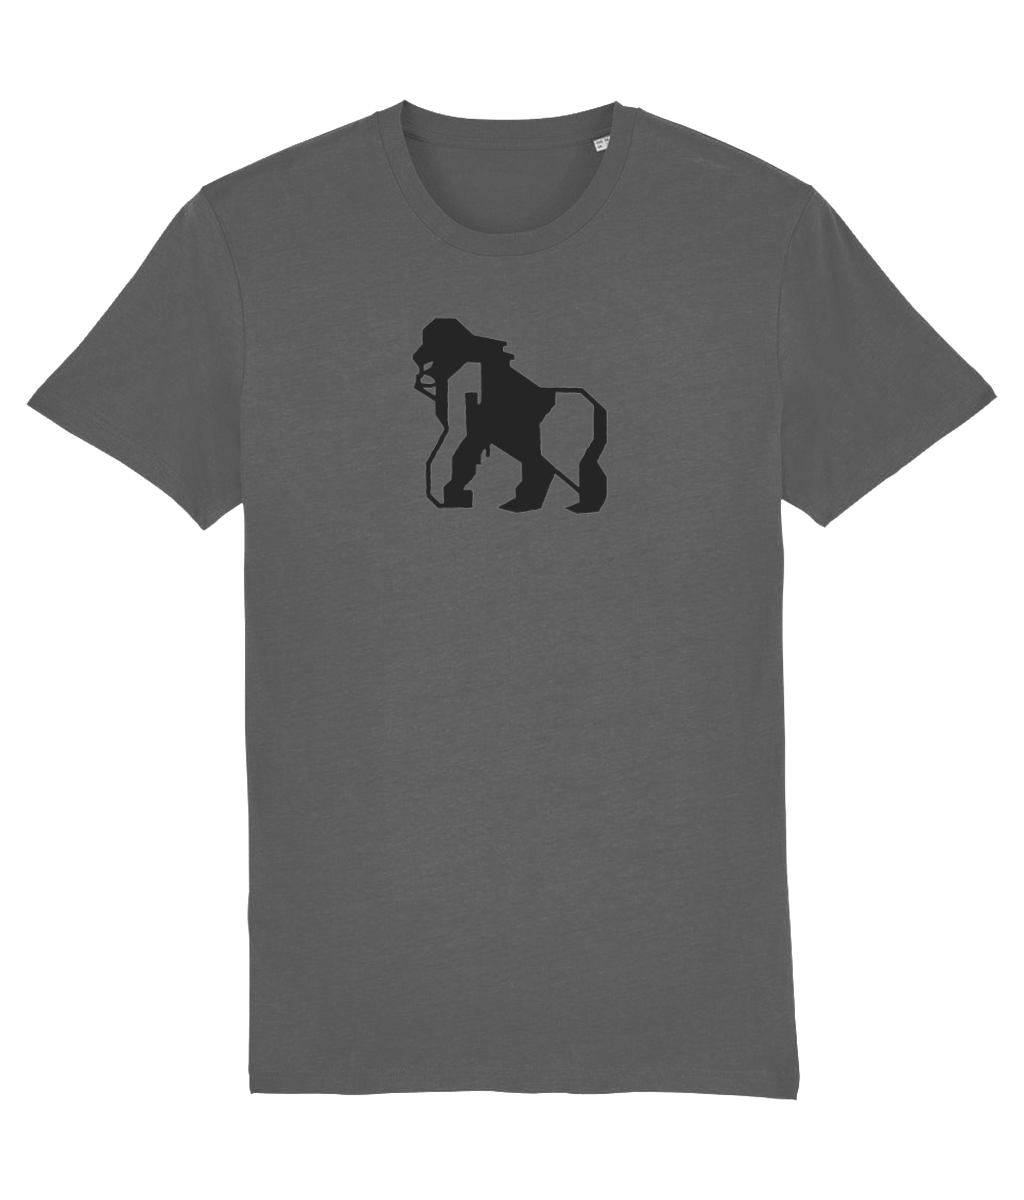 Charcoal Gorilla/Gayrilla Organic Cotton T-Shirt